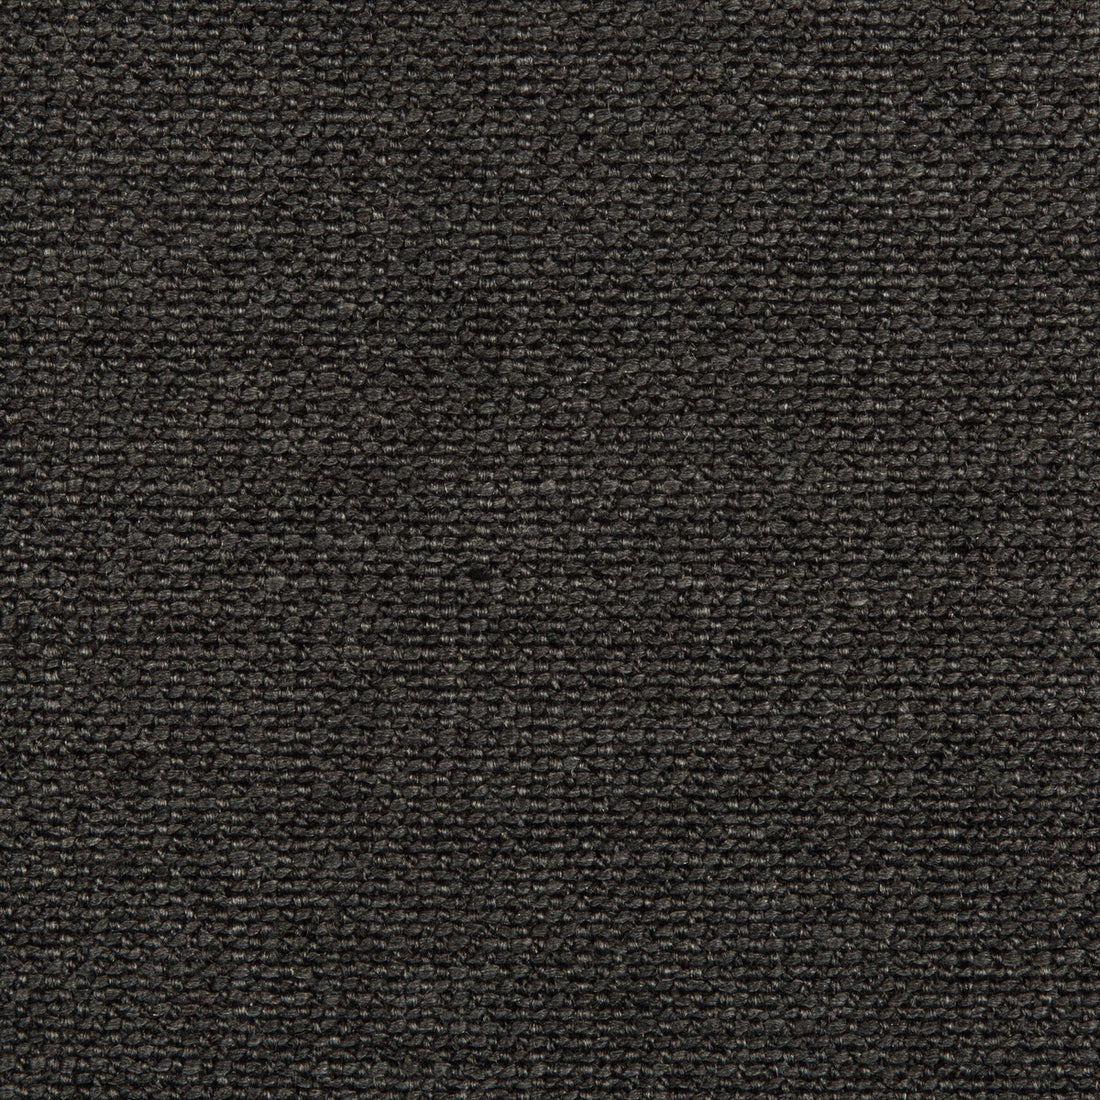 Kravet Smart fabric in 35379-821 color - pattern 35379.821.0 - by Kravet Smart in the Performance Kravetarmor collection